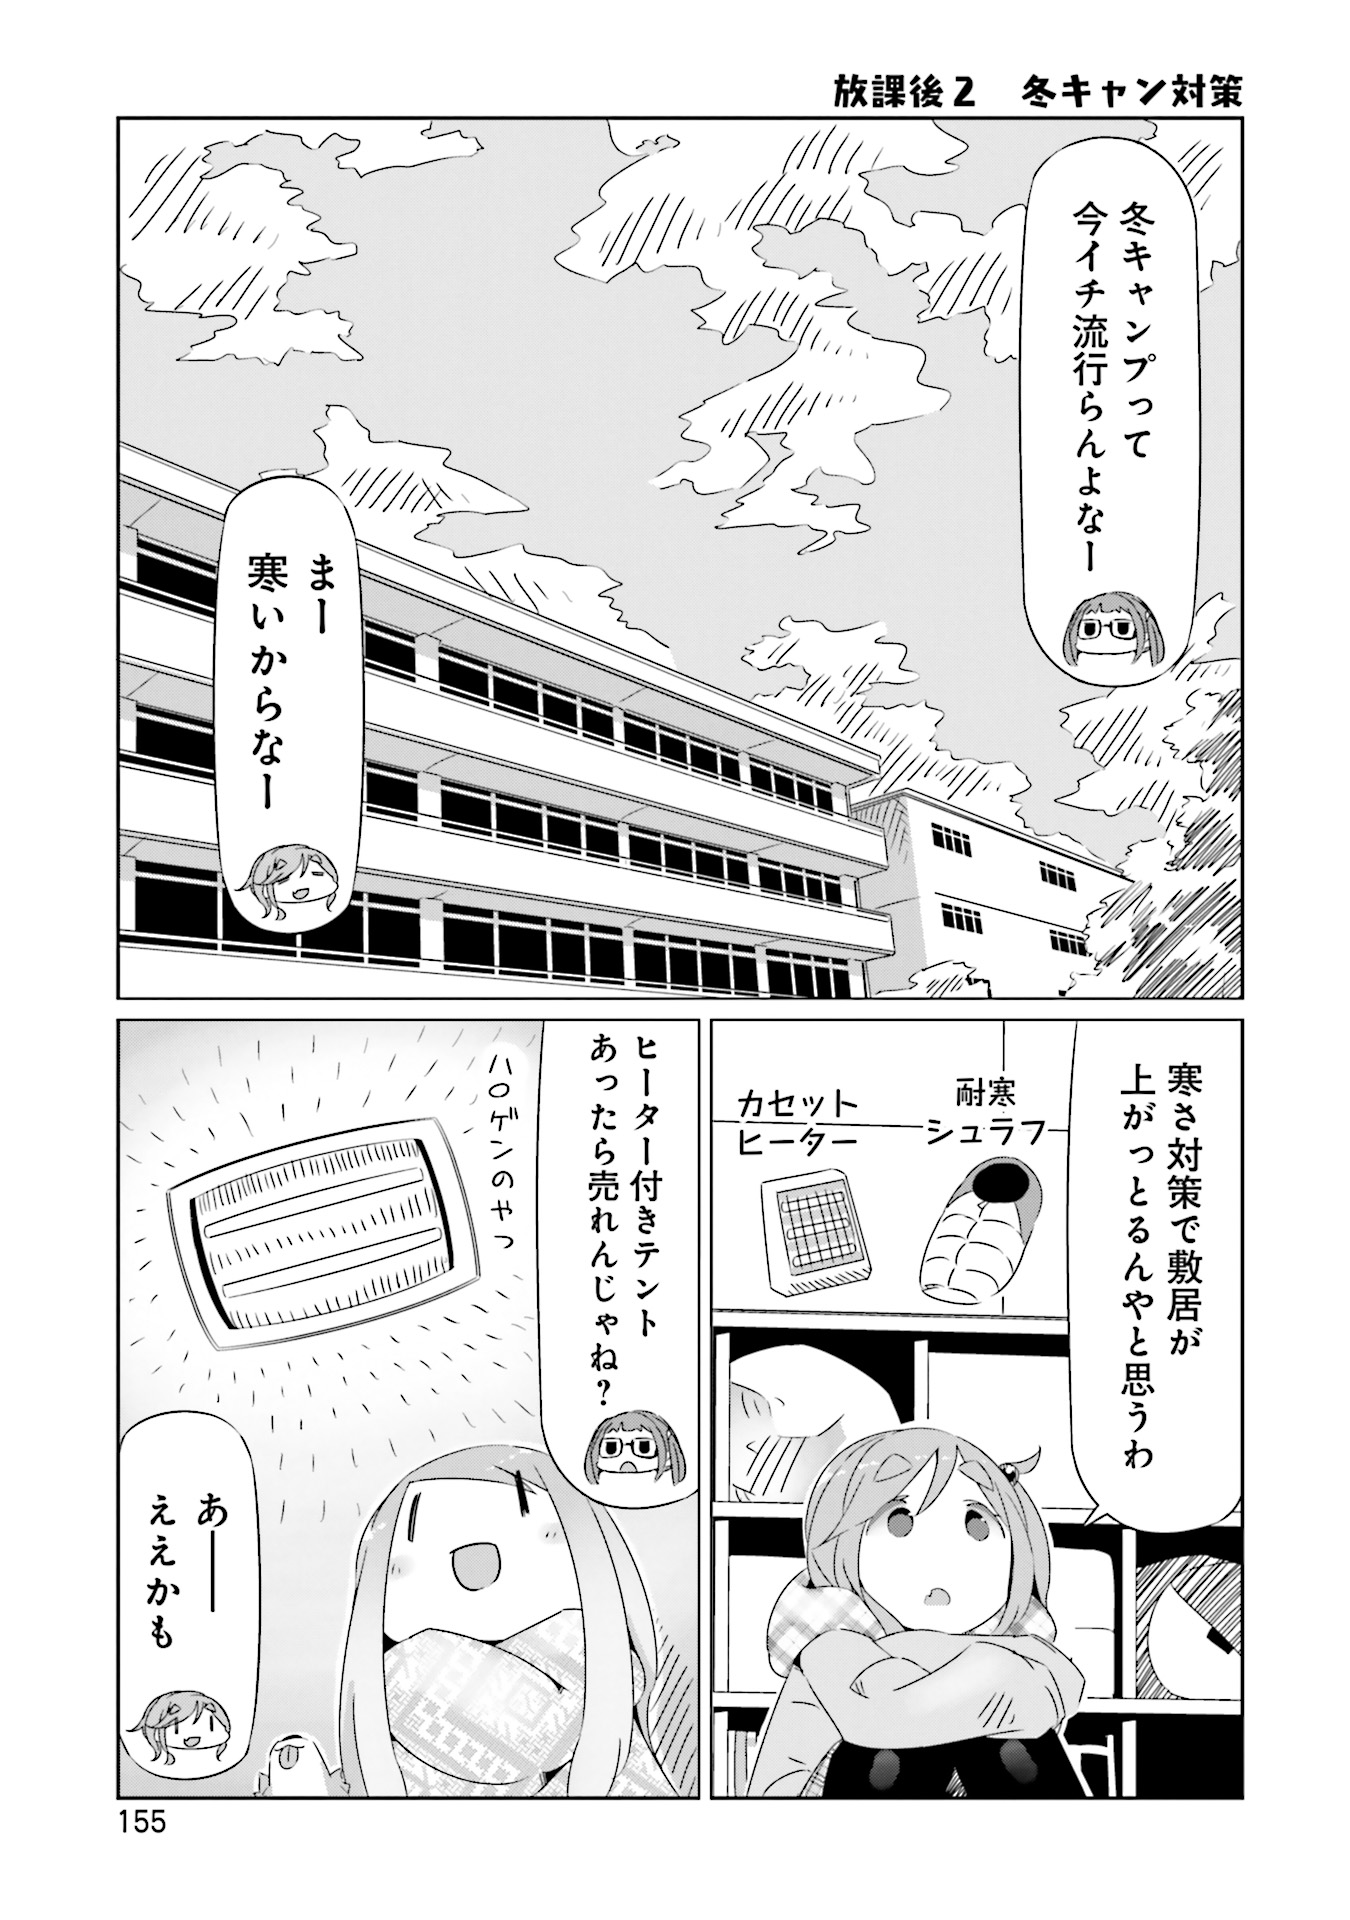 Yuru Camp - Chapter 18.5 - Page 3